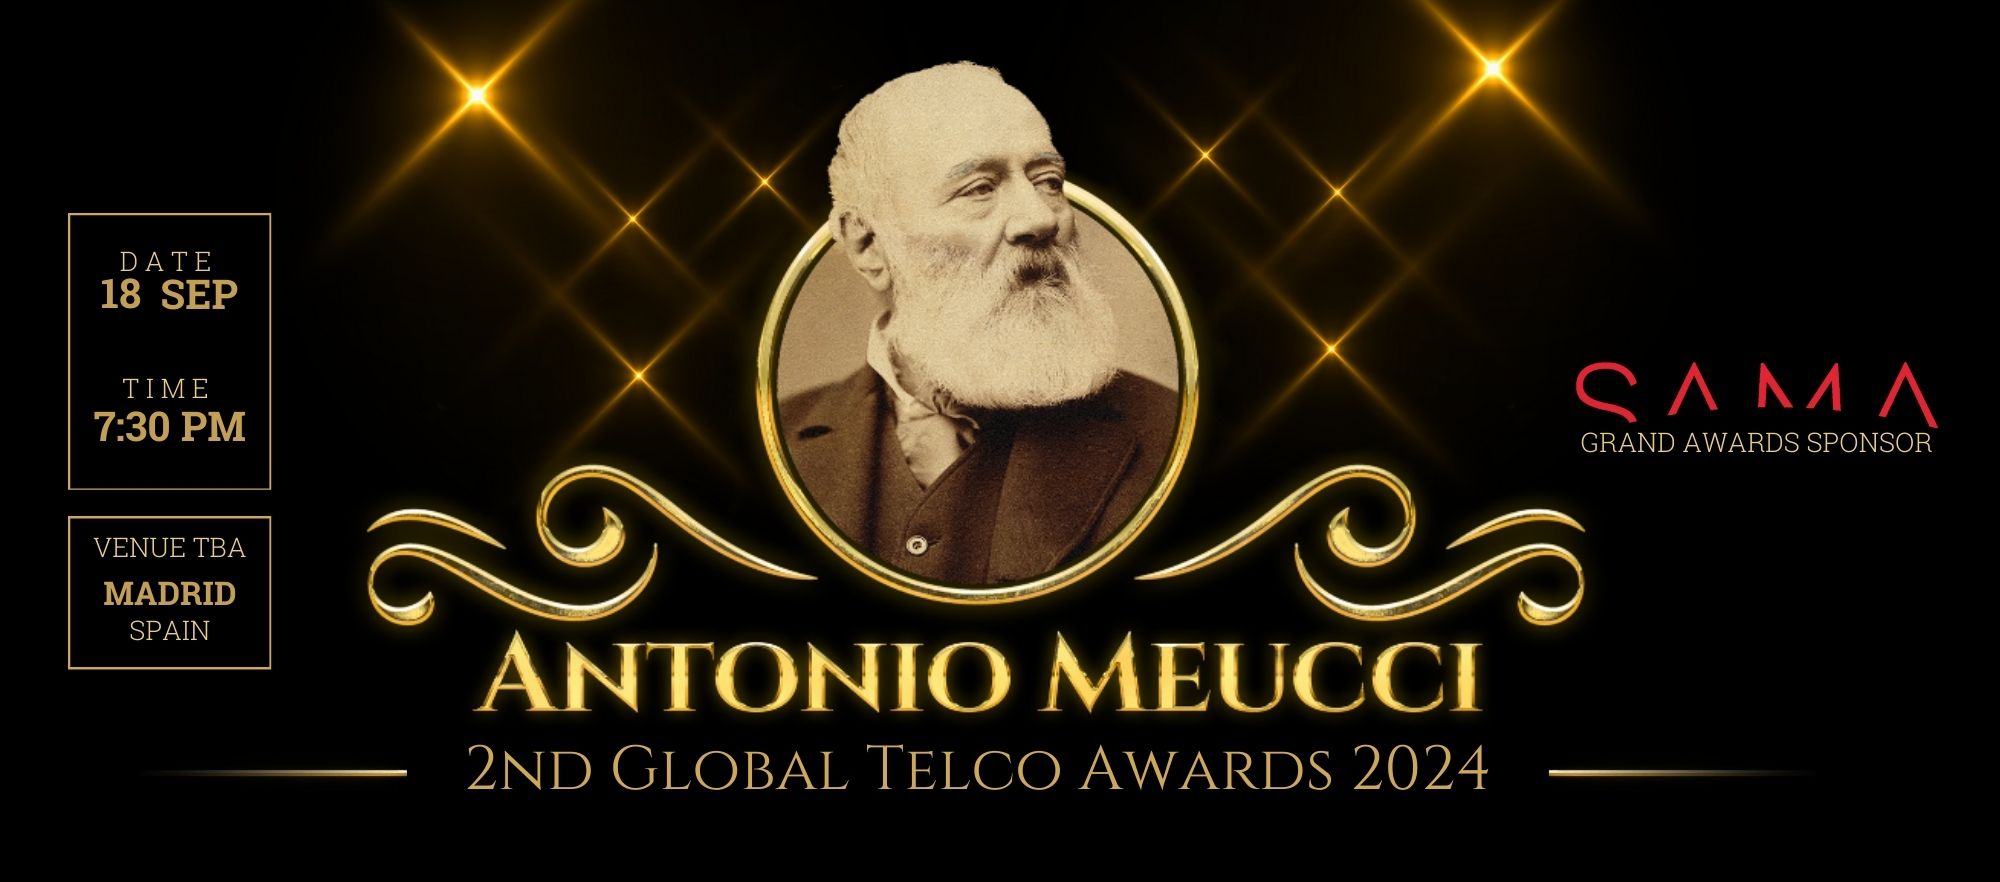 ANTONIO MEUCCI AWARDS 2024